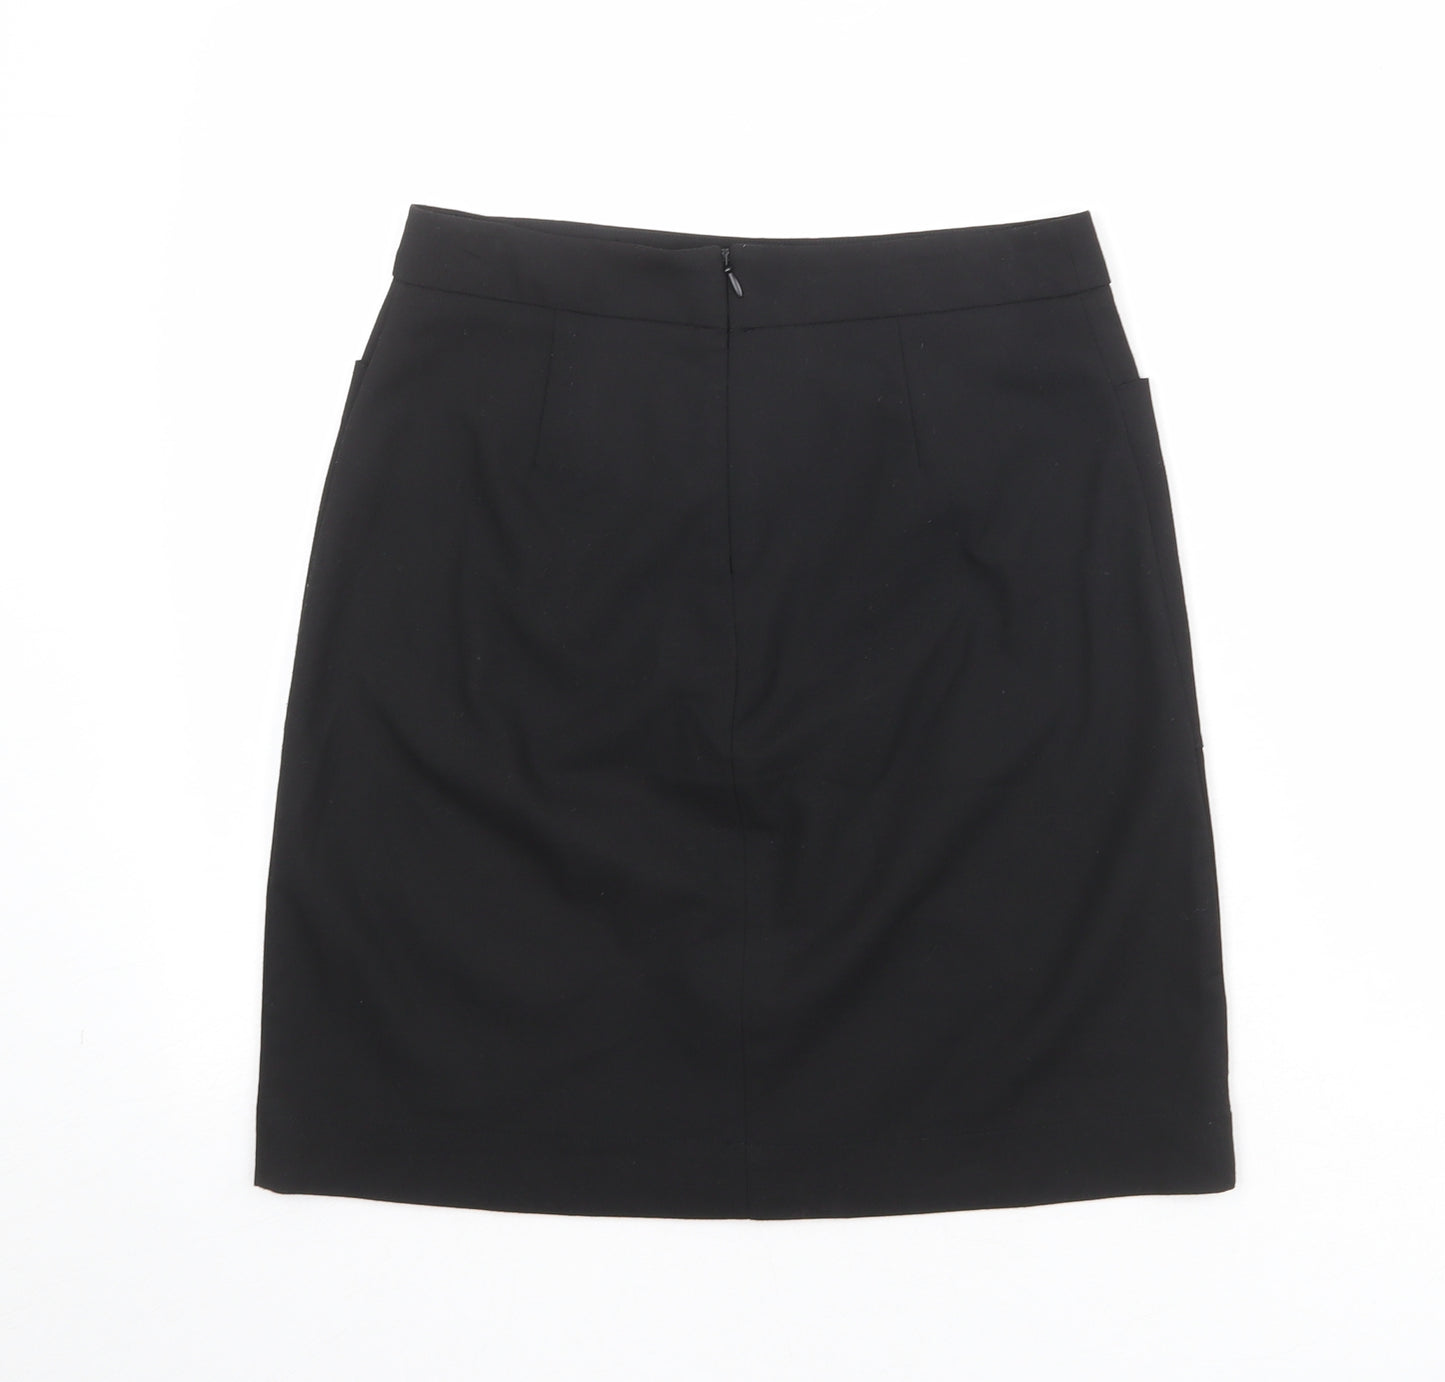 NEXT Womens Black Polyester A-Line Skirt Size 8 Zip